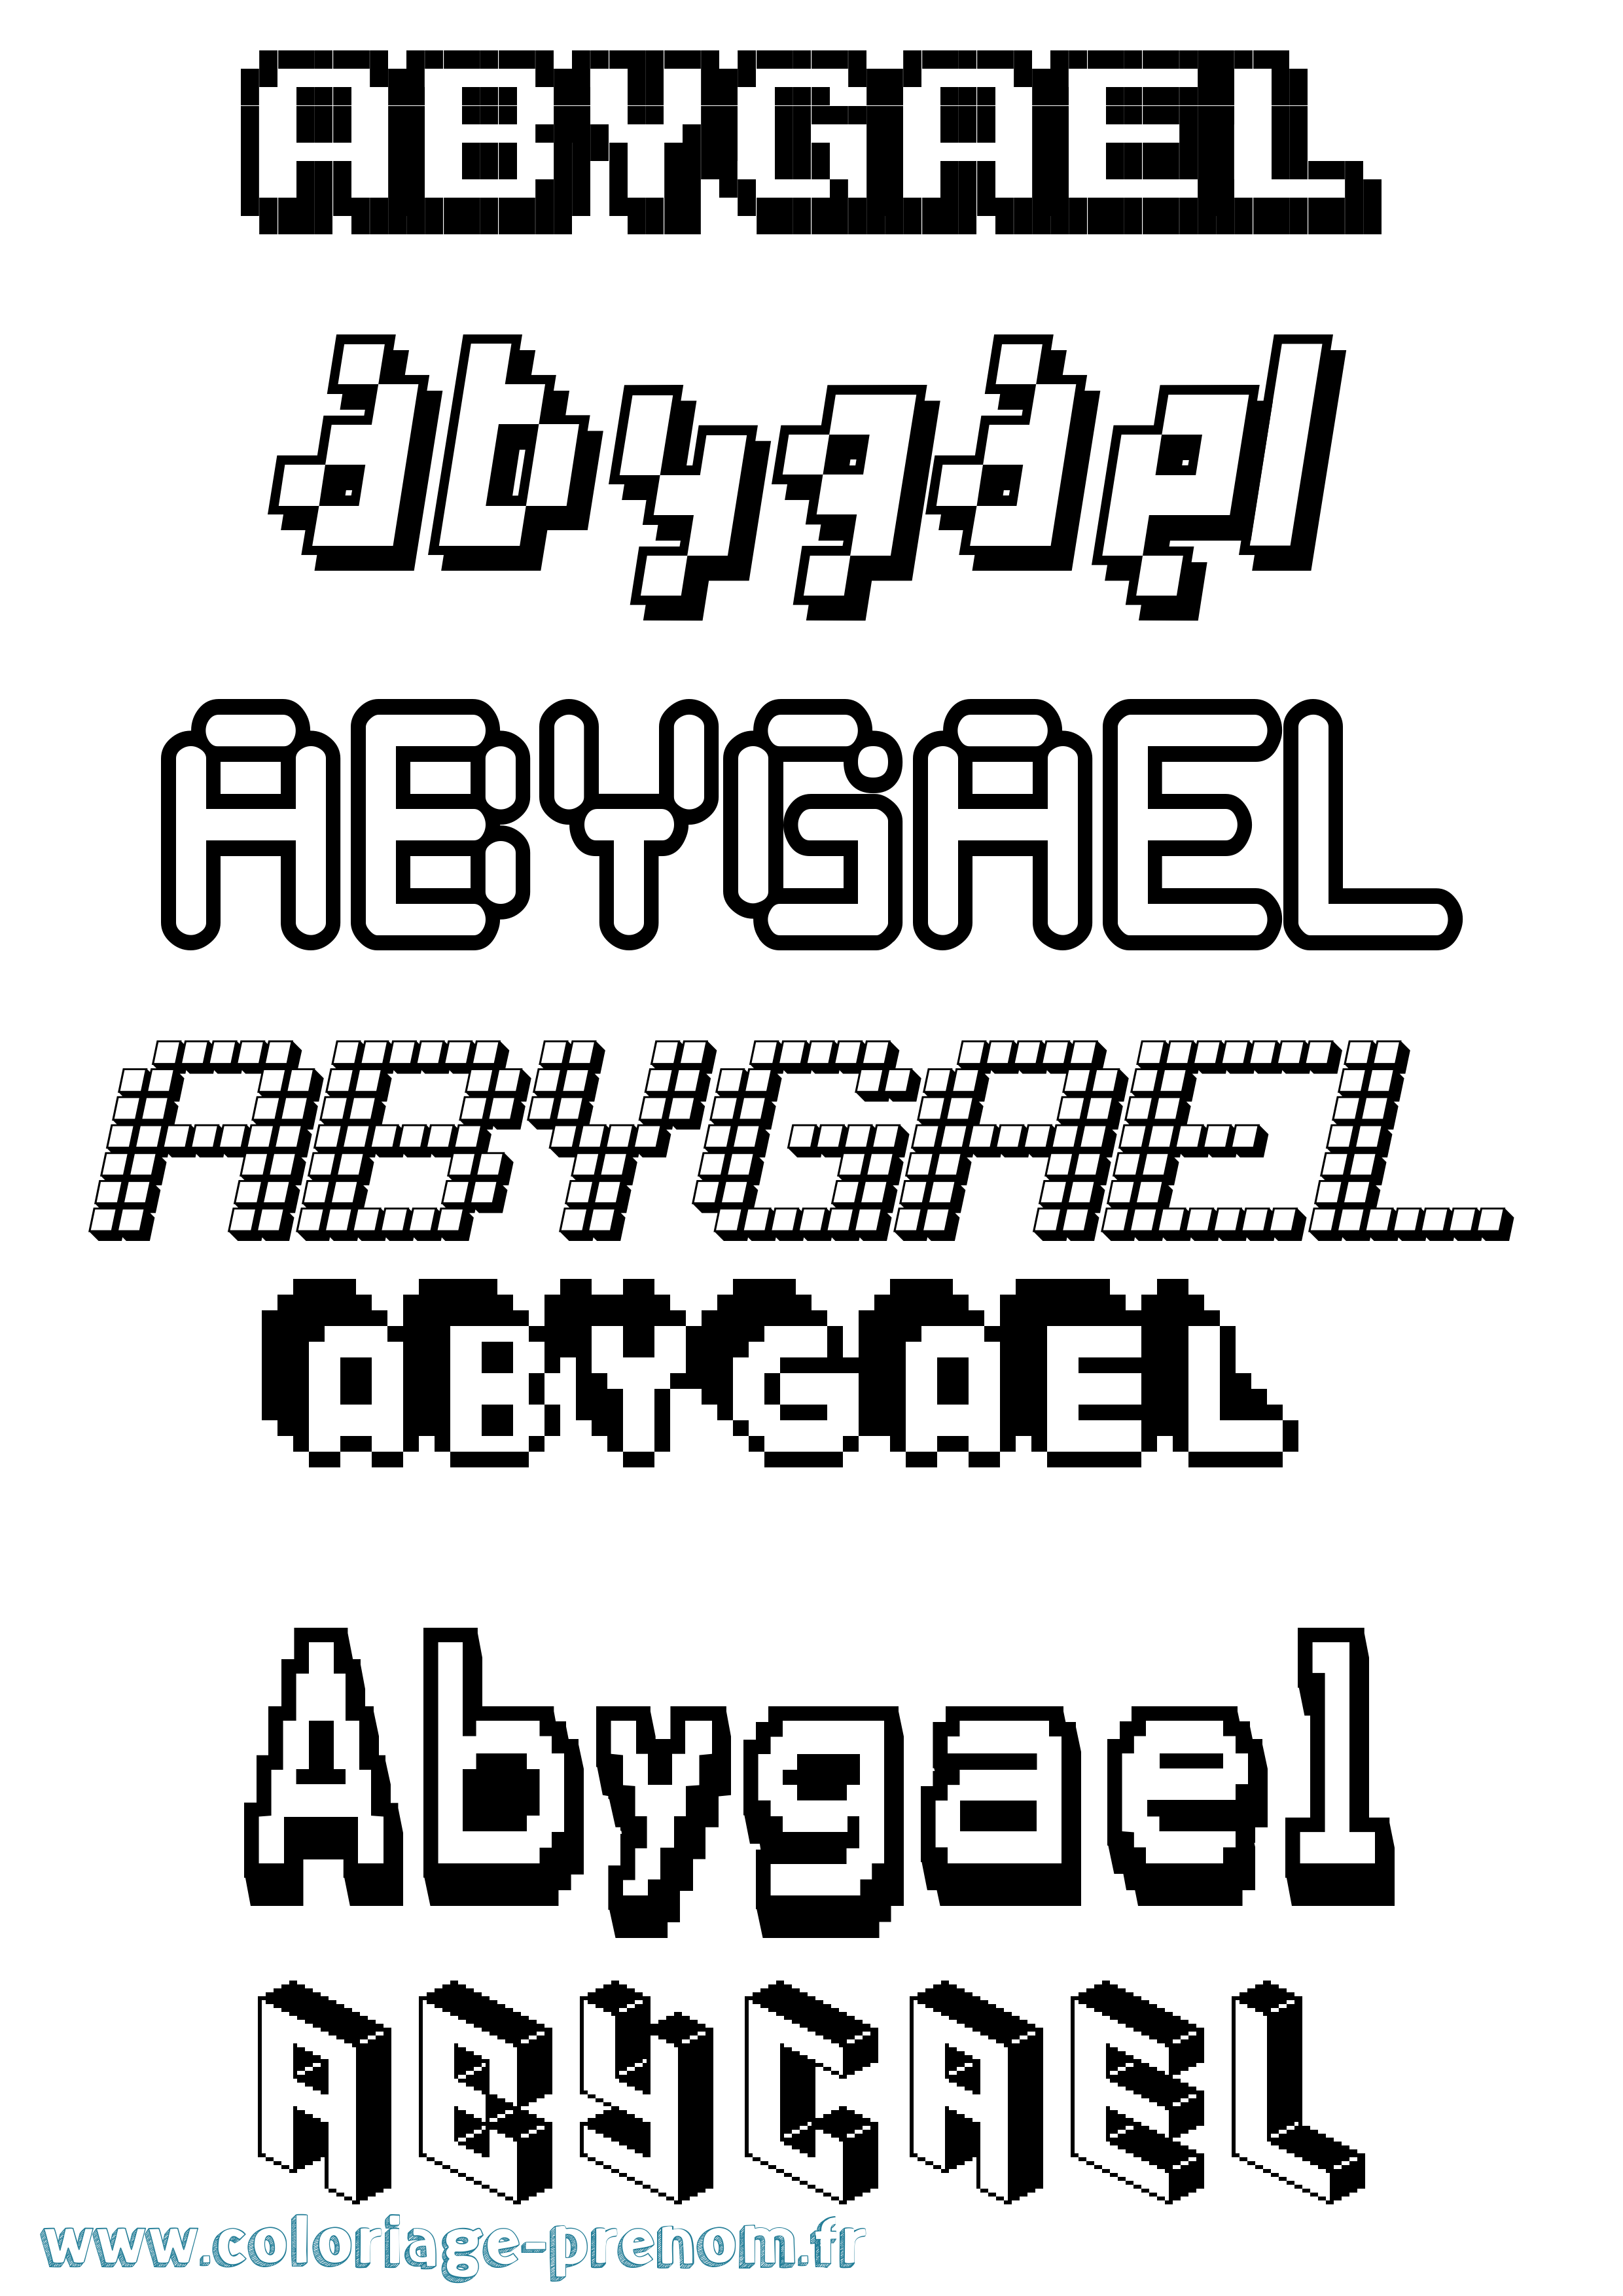 Coloriage prénom Abygael Pixel